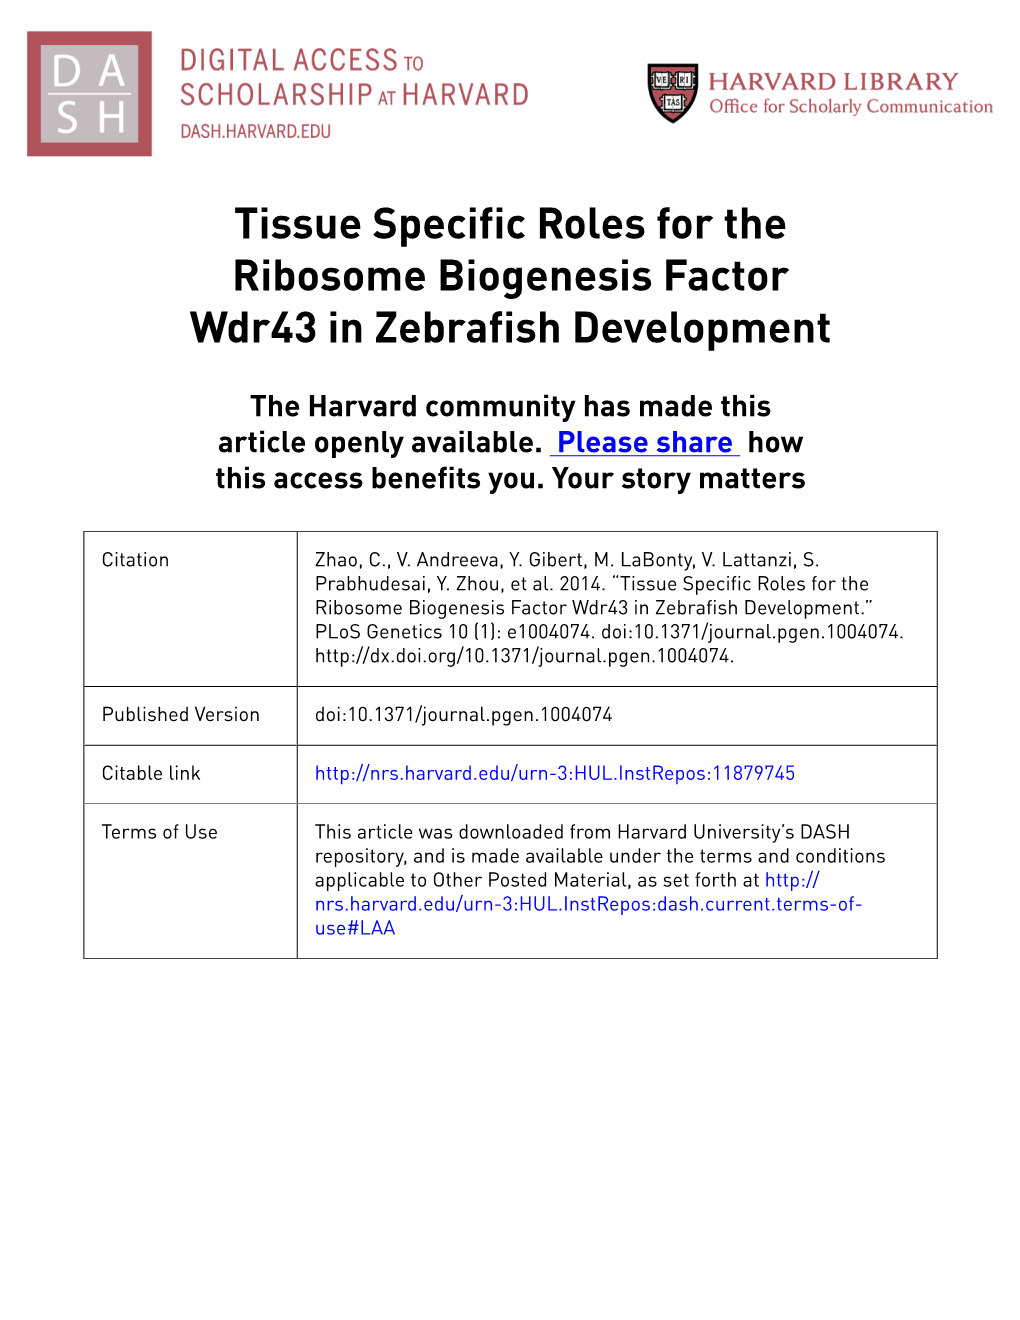 Tissue Specific Roles for the Ribosome Biogenesis Factor Wdr43 in Zebrafish Development